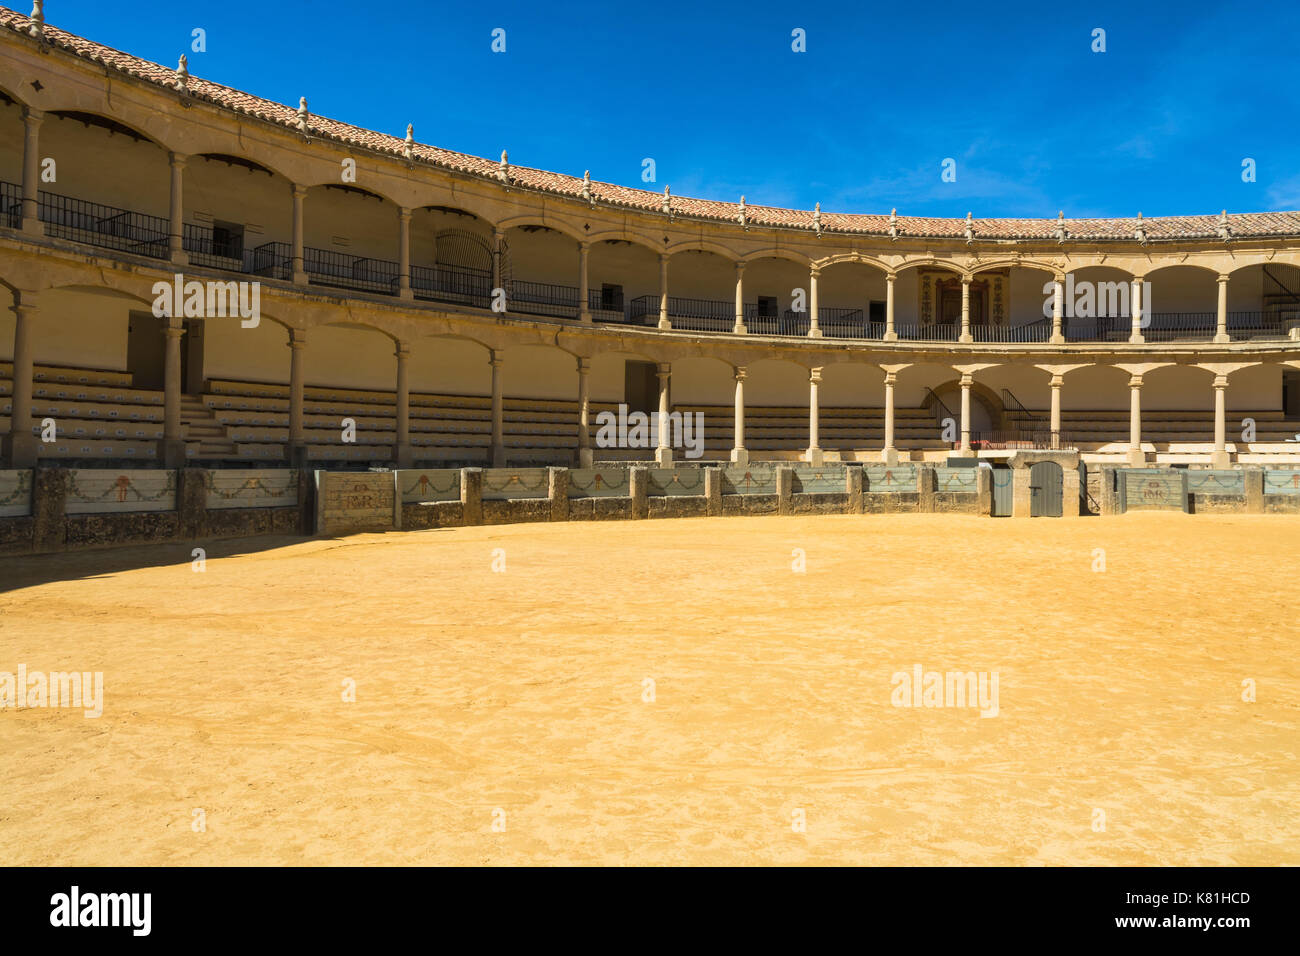 Ronda, Spain - March 7, 2017:  The corrida, interior of the bullring arena. Stock Photo